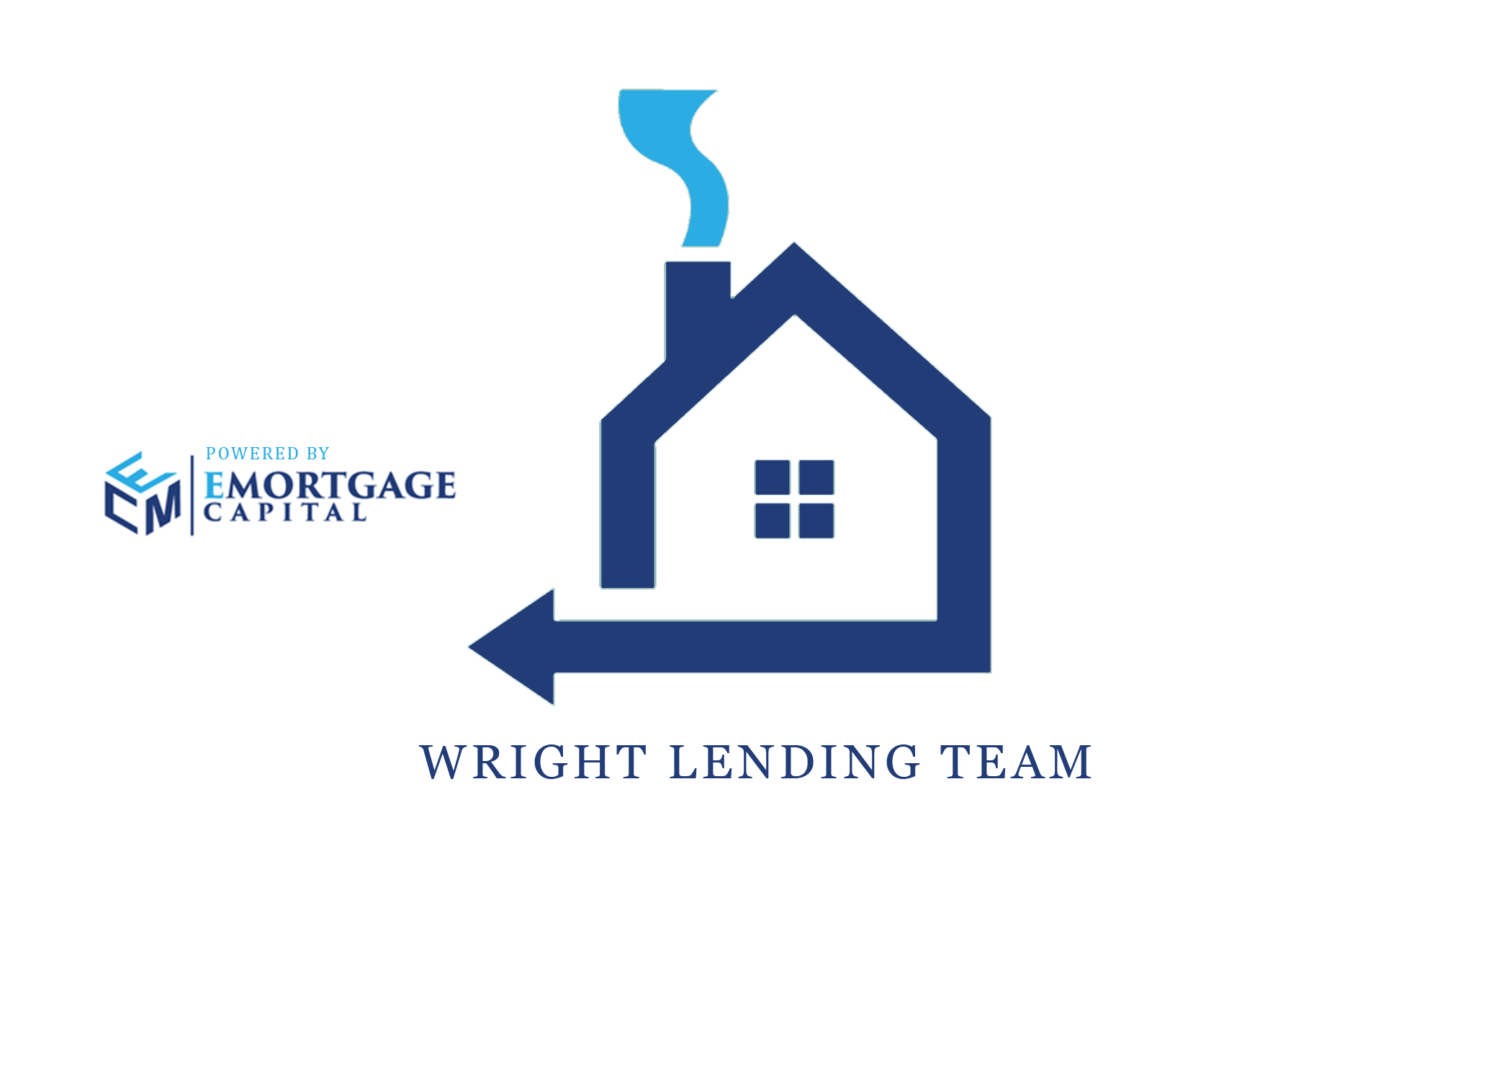 Wright Lending Team/E Mortgage Capital